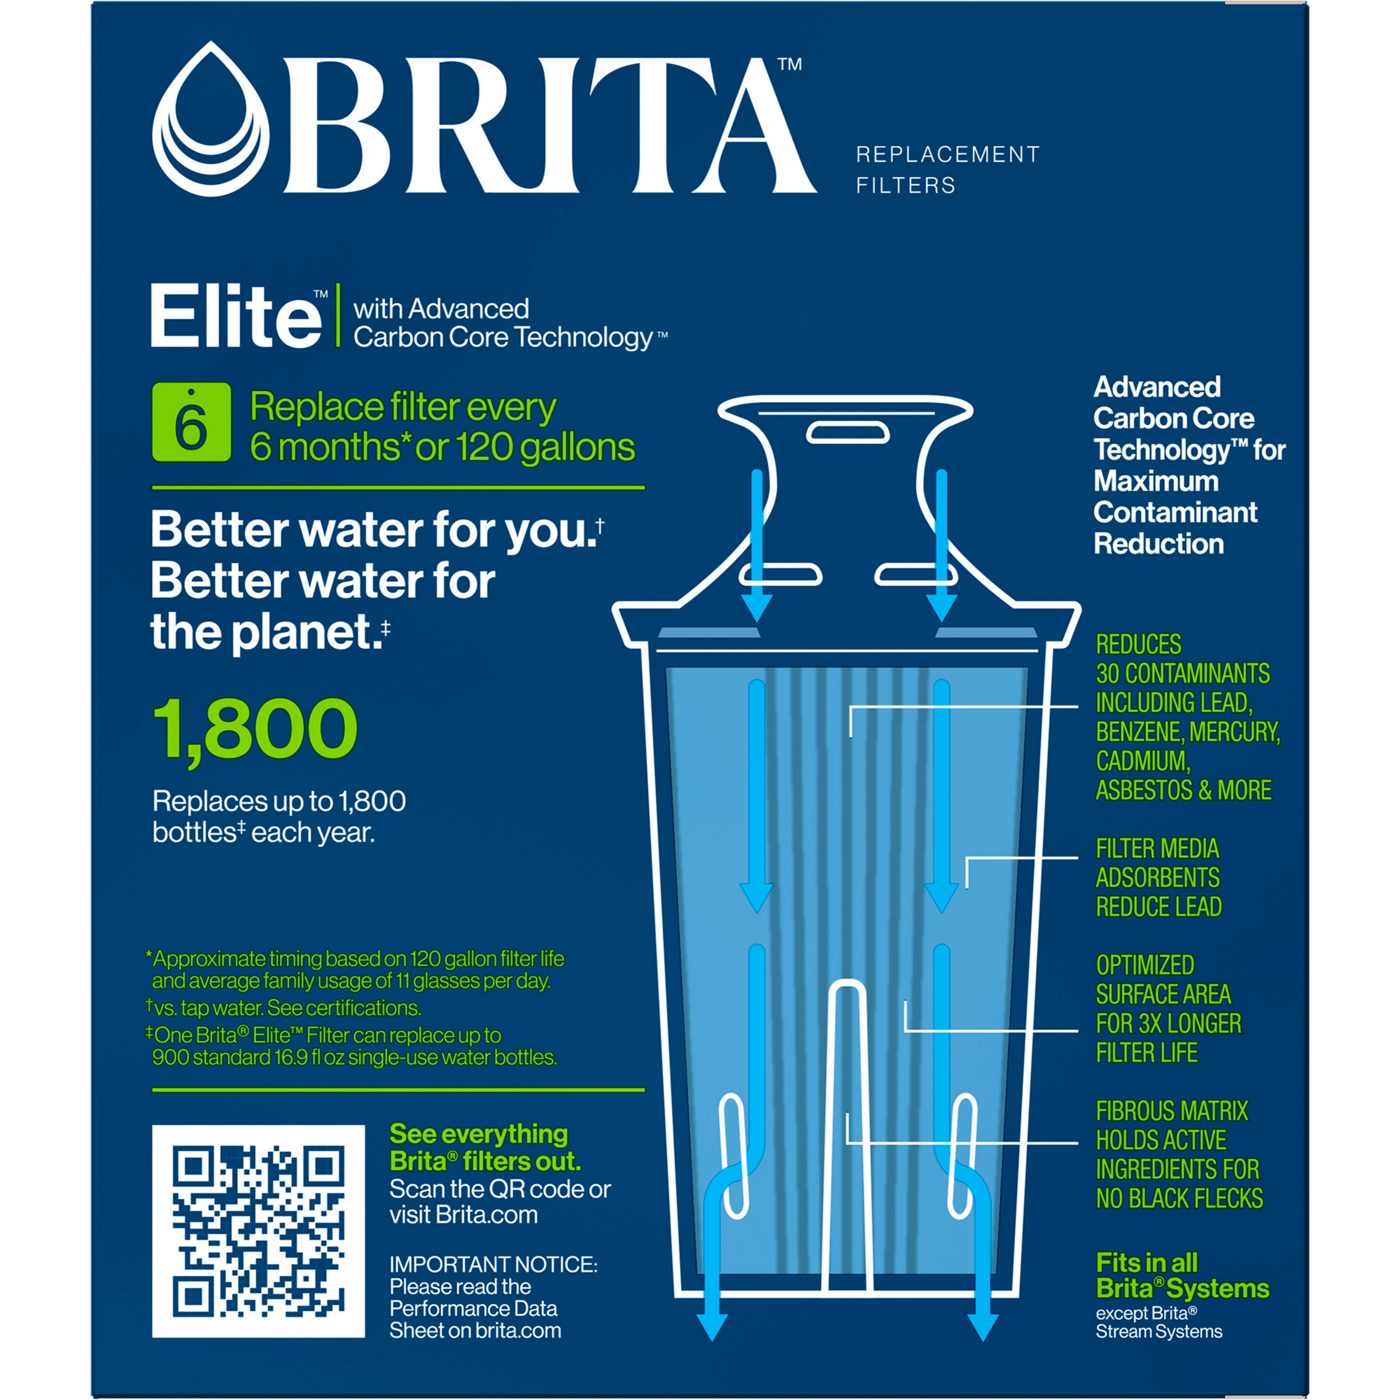 Brita Elite Rplacement Water Filters; image 10 of 10